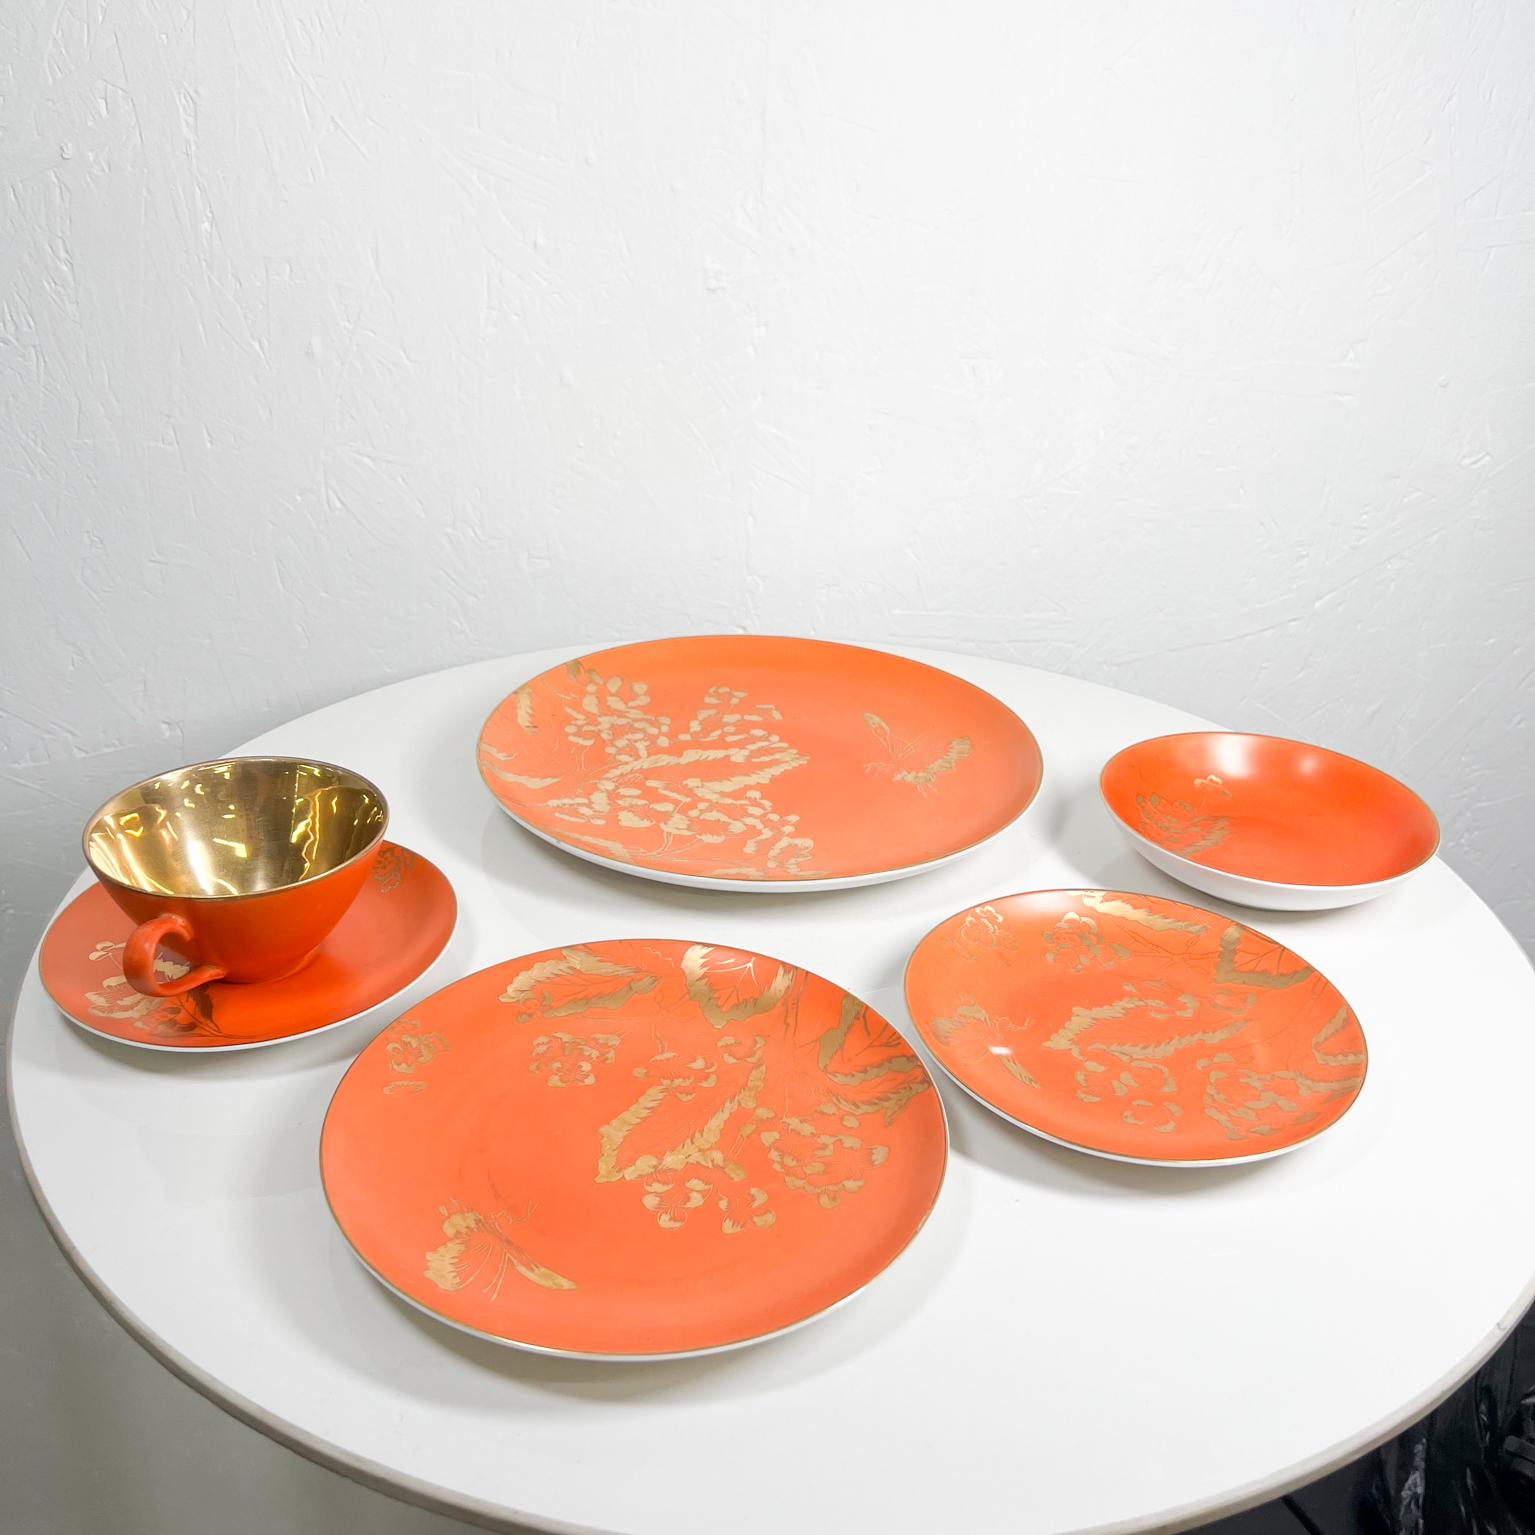 1960s dinnerware patterns